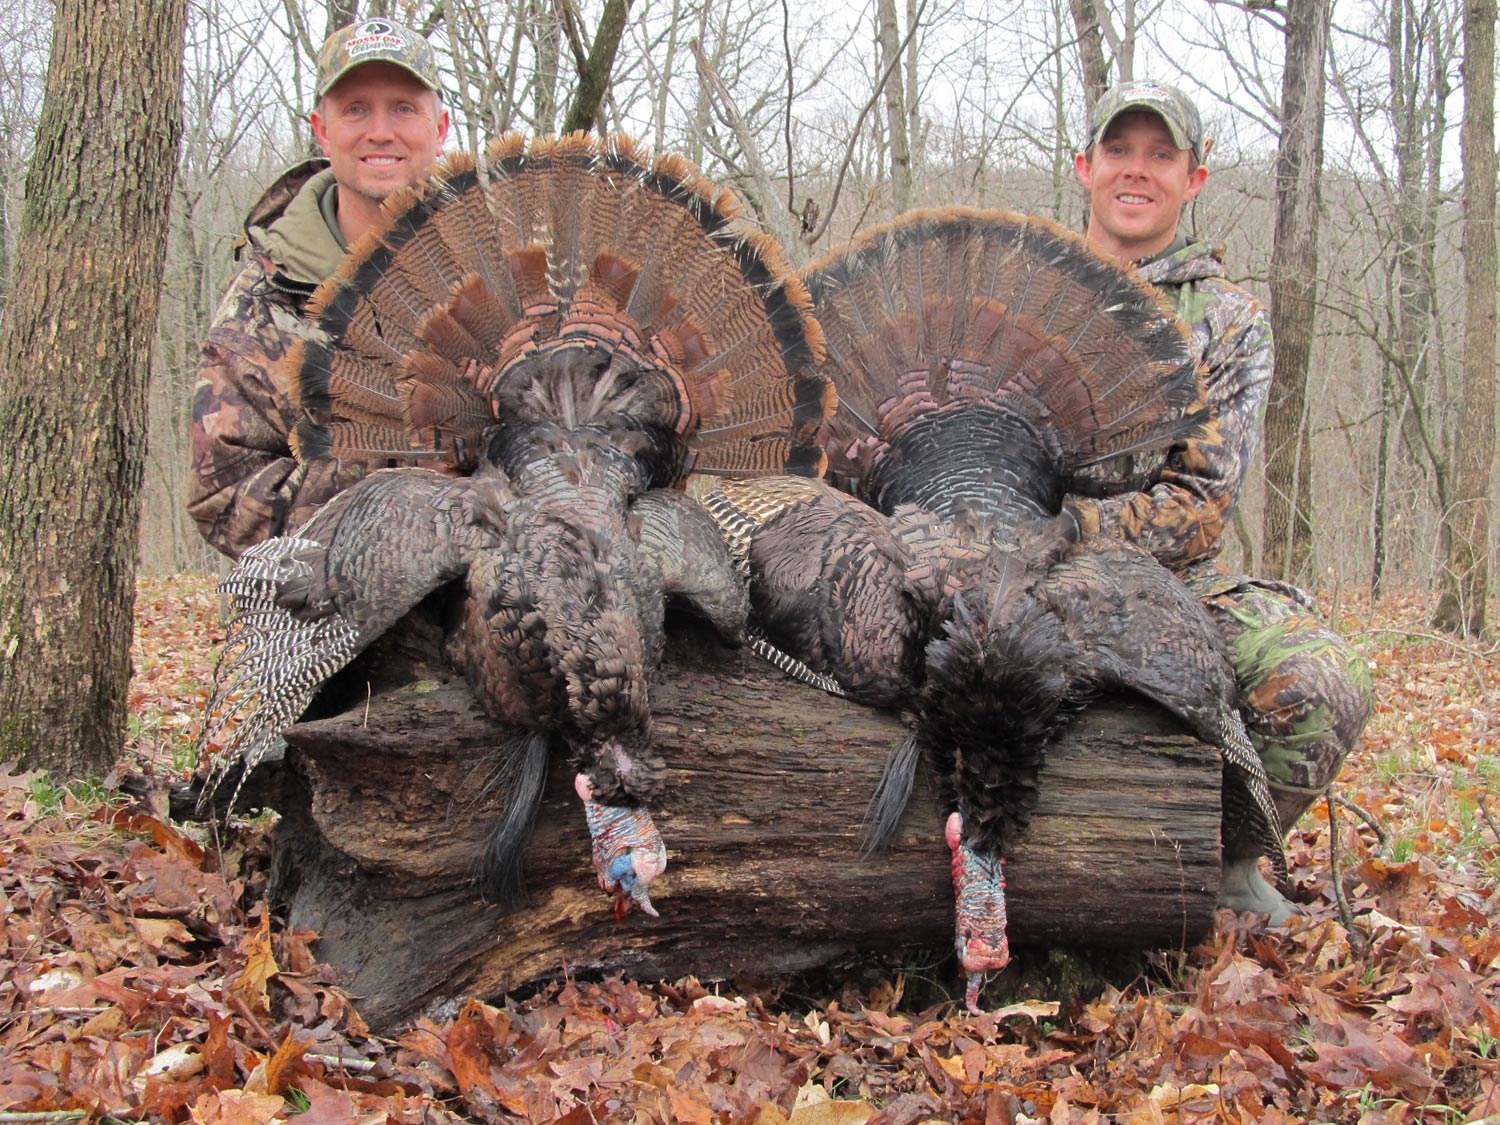 Two hunters with two Missouri turkeys